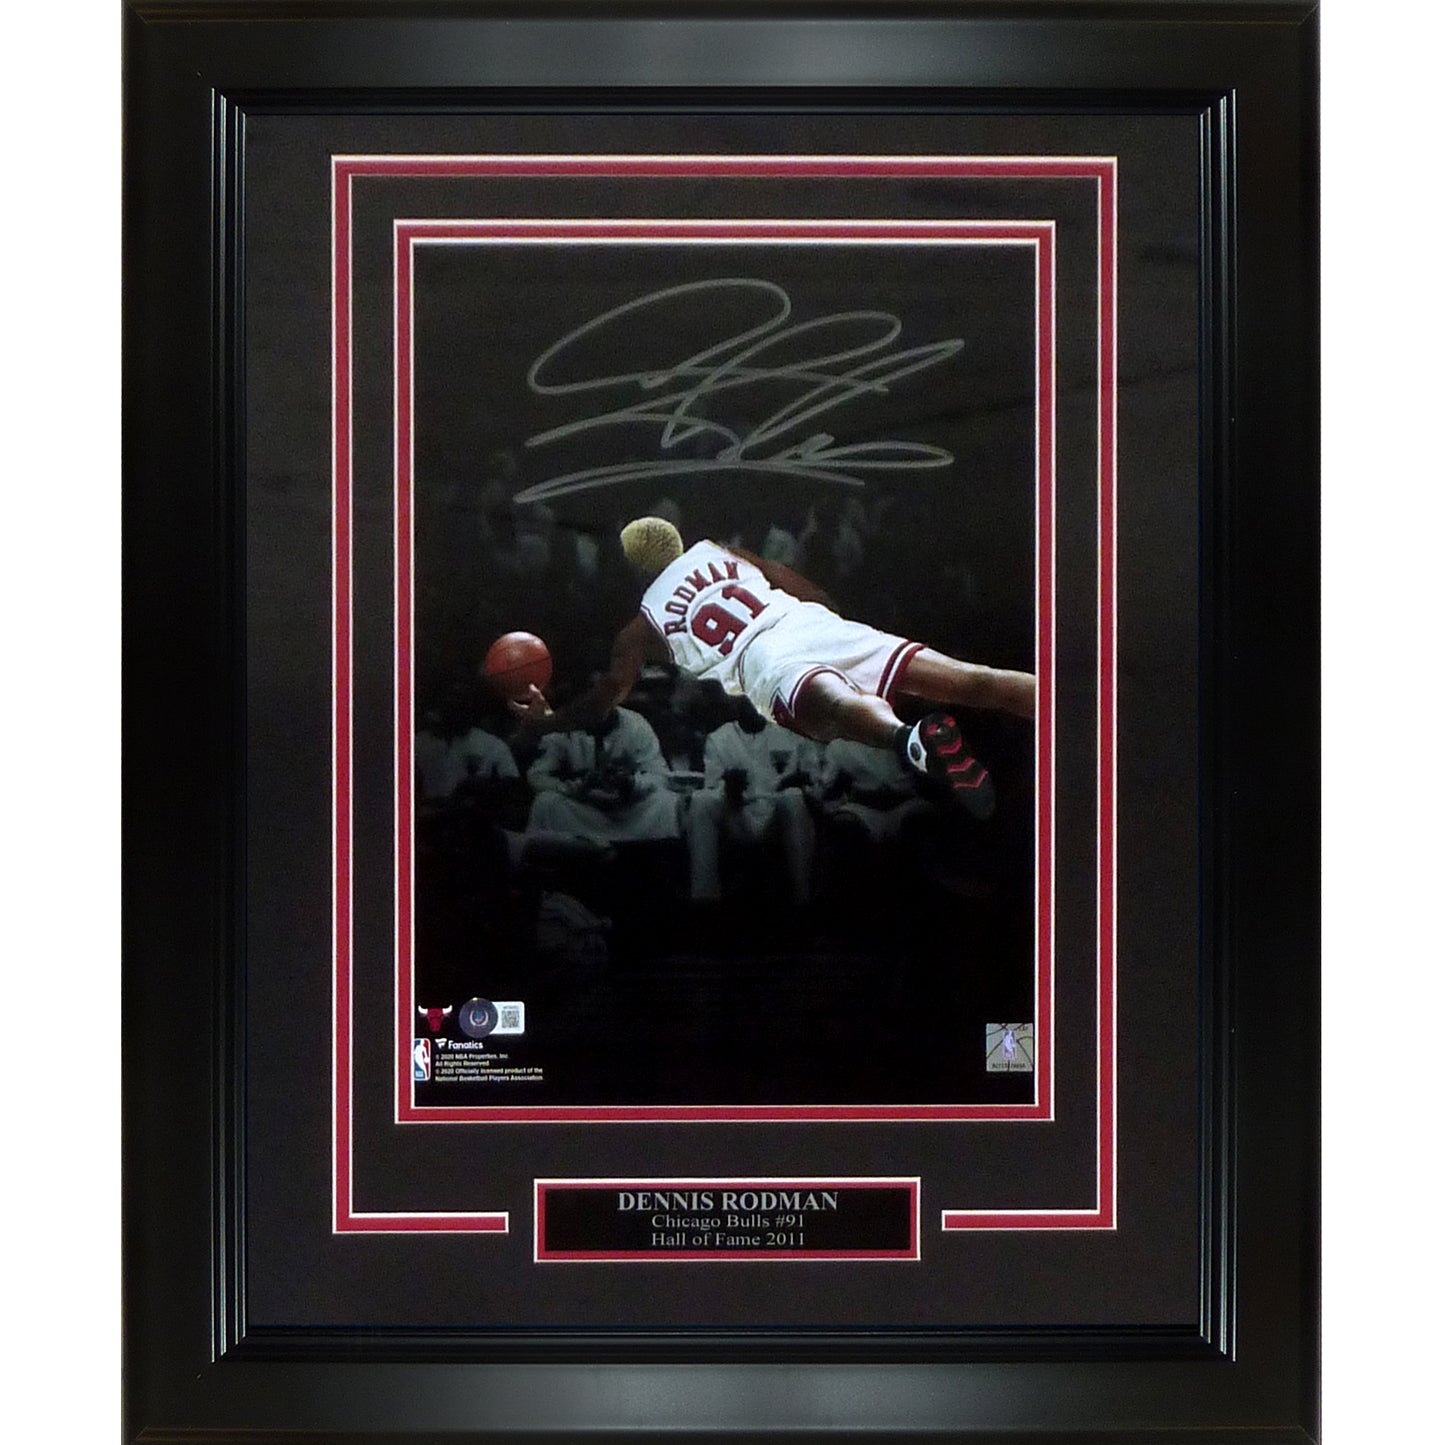 Dennis Rodman Autographed Chicago Bulls (Spotlight Dive) Deluxe Framed 11x14 Photo - JSA